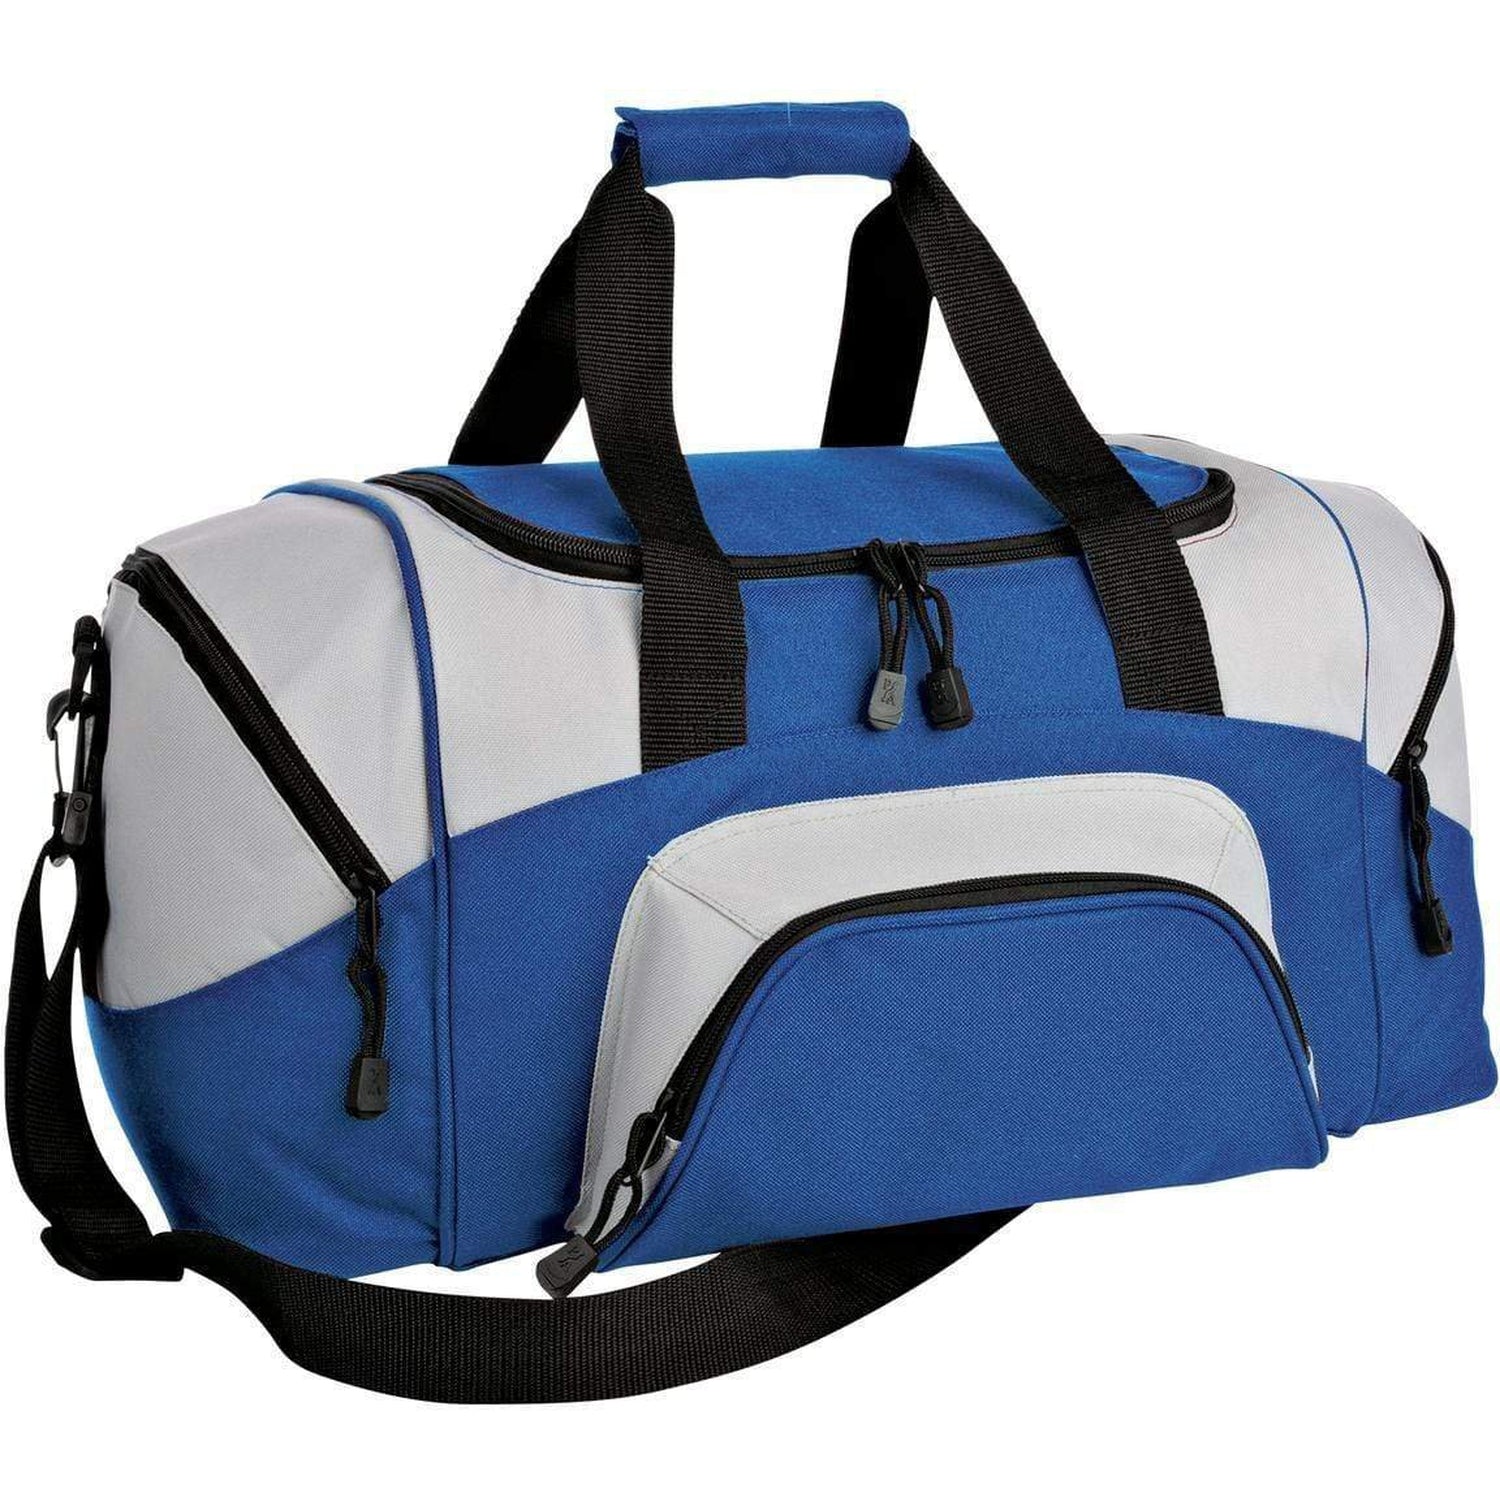 Customizable Duffle Bags in Bulk, Wholesale Cheap Duffle Bags - No minimum – BagzDepot™